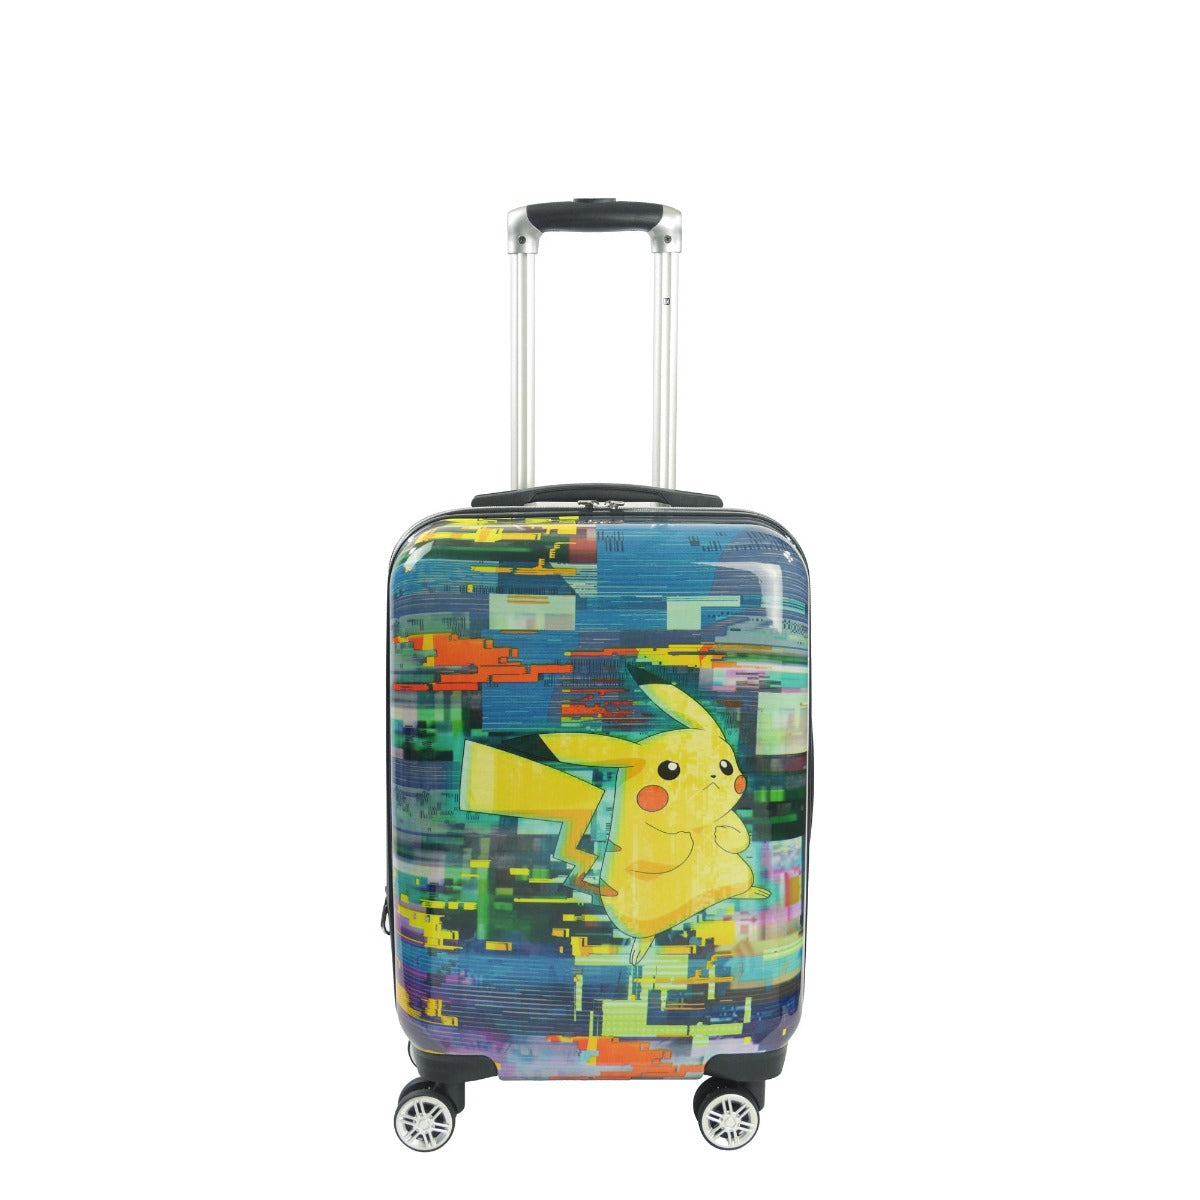 Pokemon Pikachu Luggage 21" carry on hard sided Ful spinner wheel suitcase